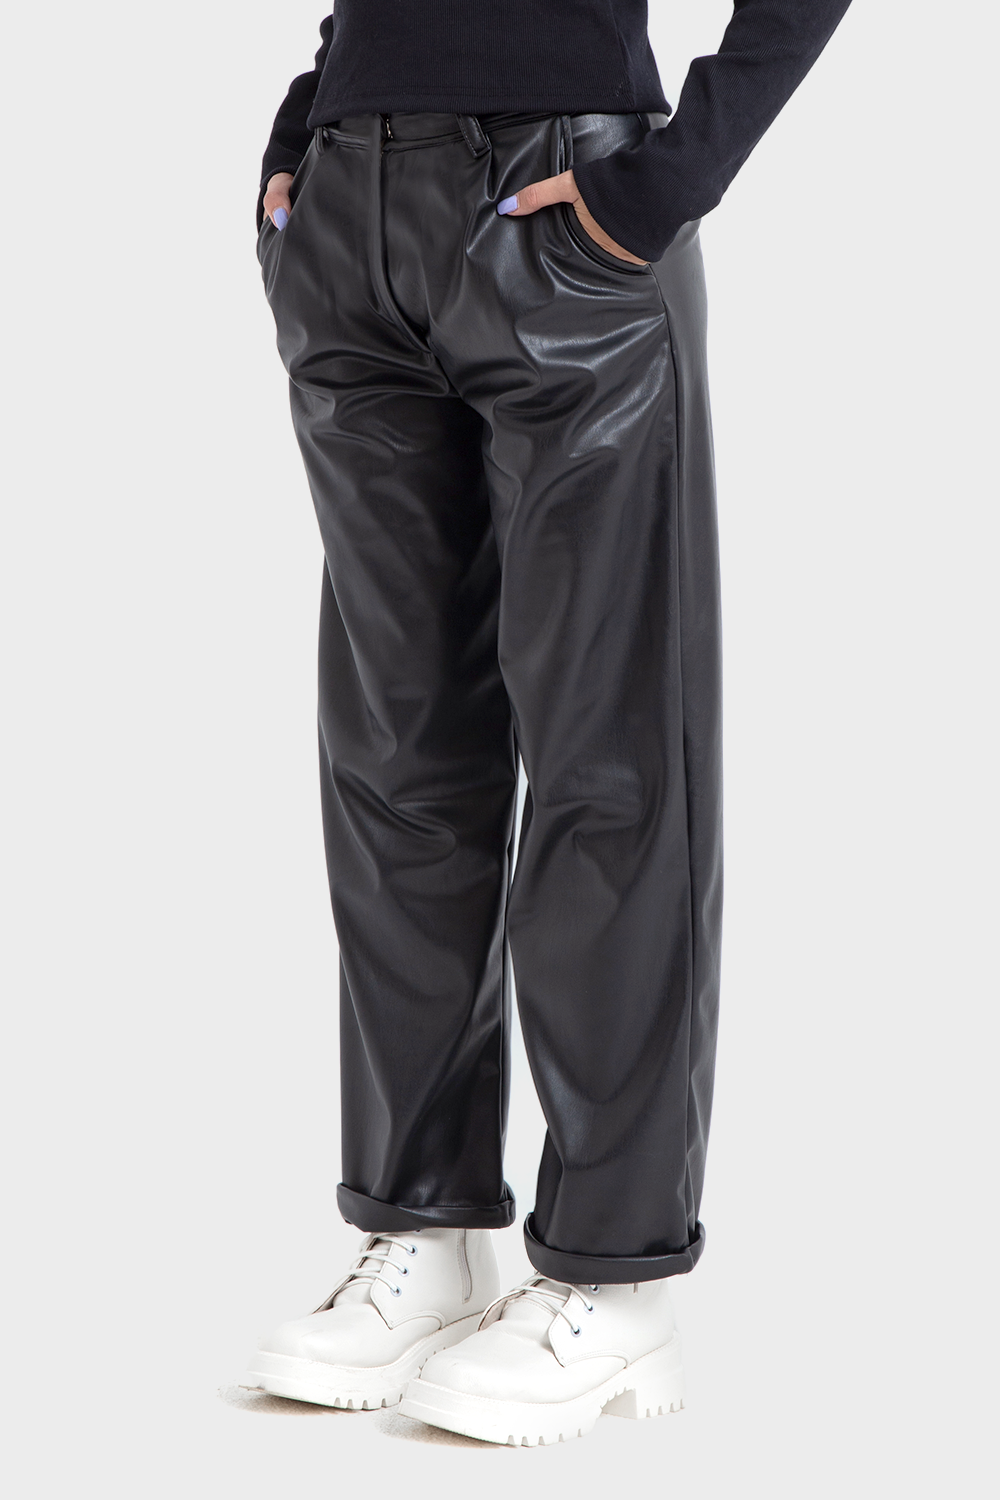 Premium Line, Black Straight Leather Pants